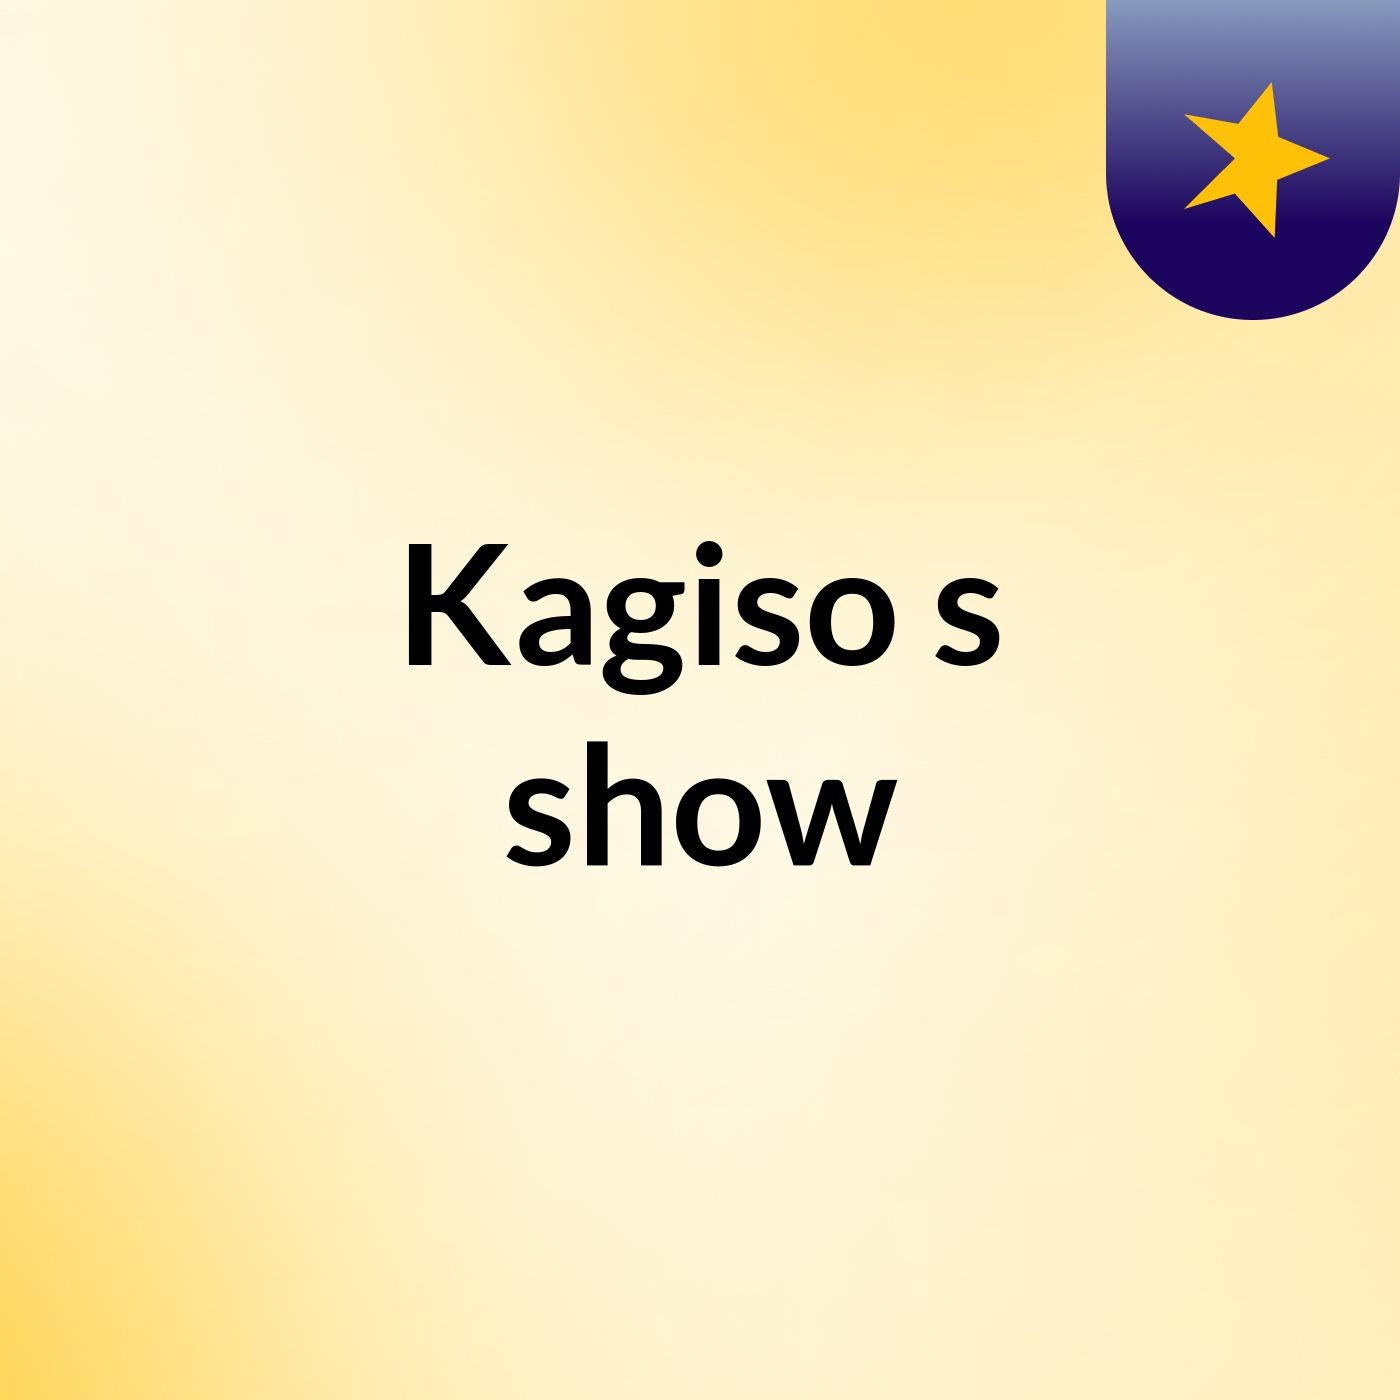 Kagiso's show